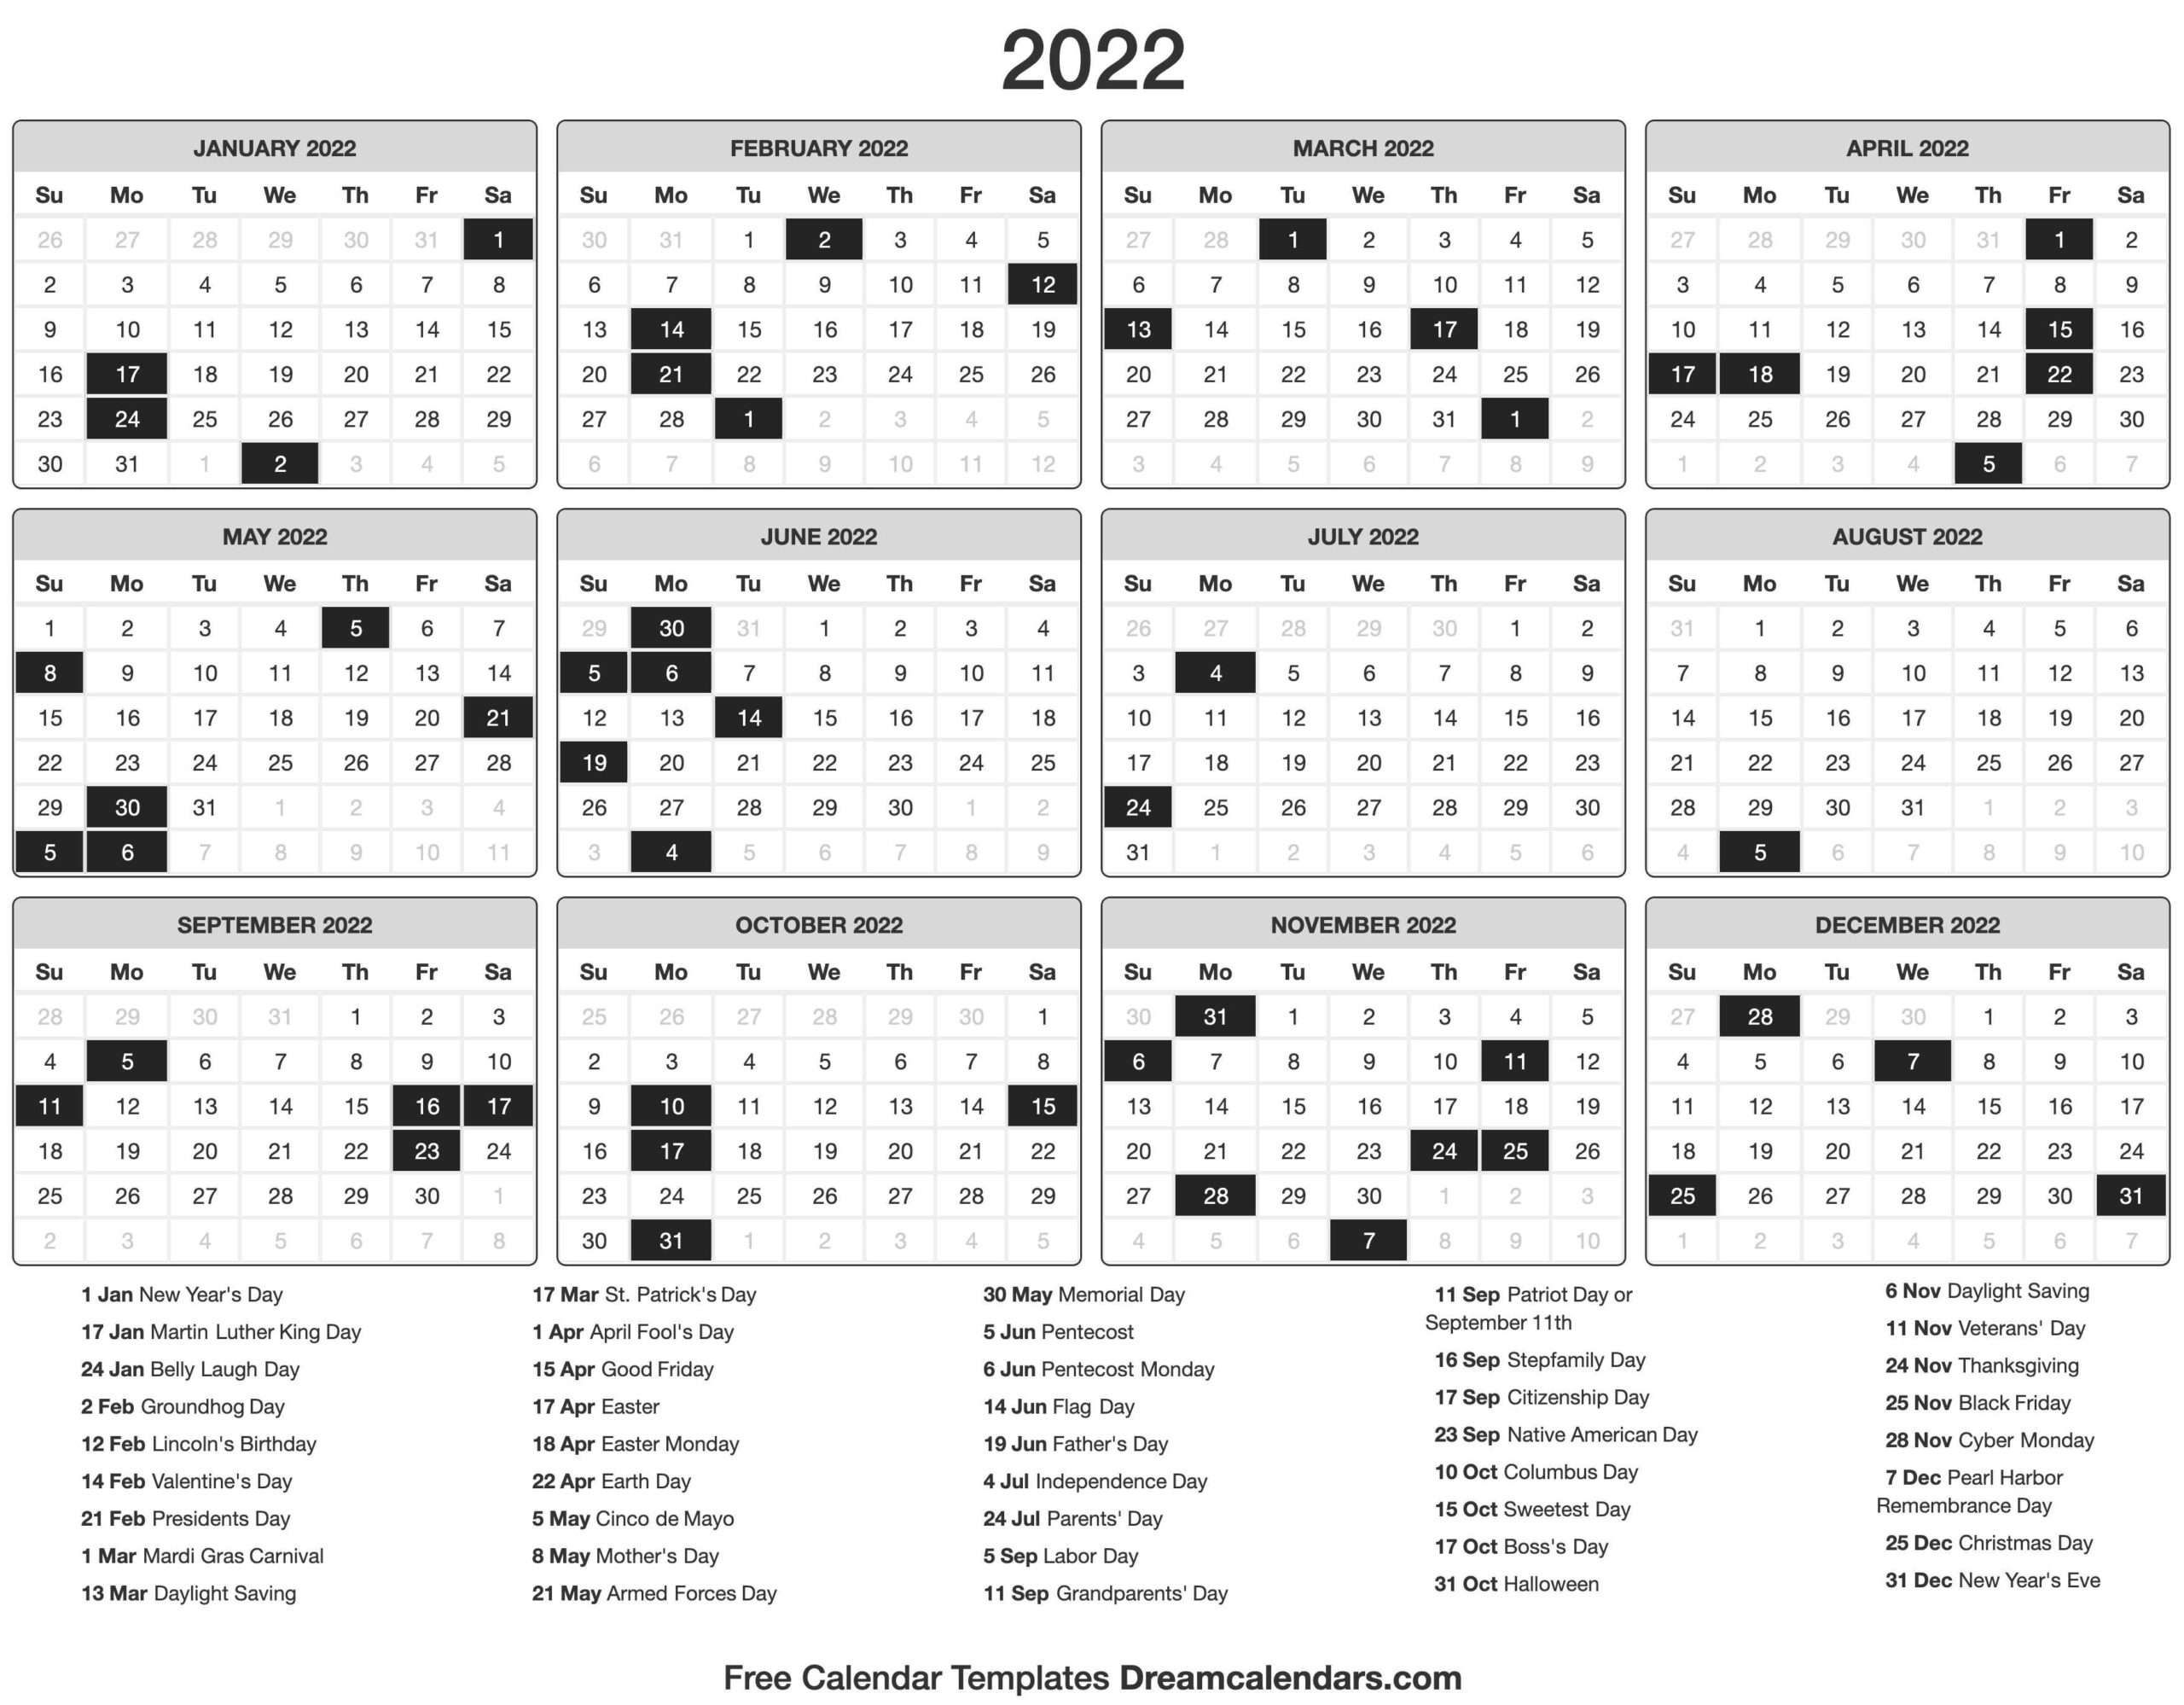 Columbus Day 2022 Calendar - March 2022 Calendar  Astronomy Picture Of The Day Calendar December 2022